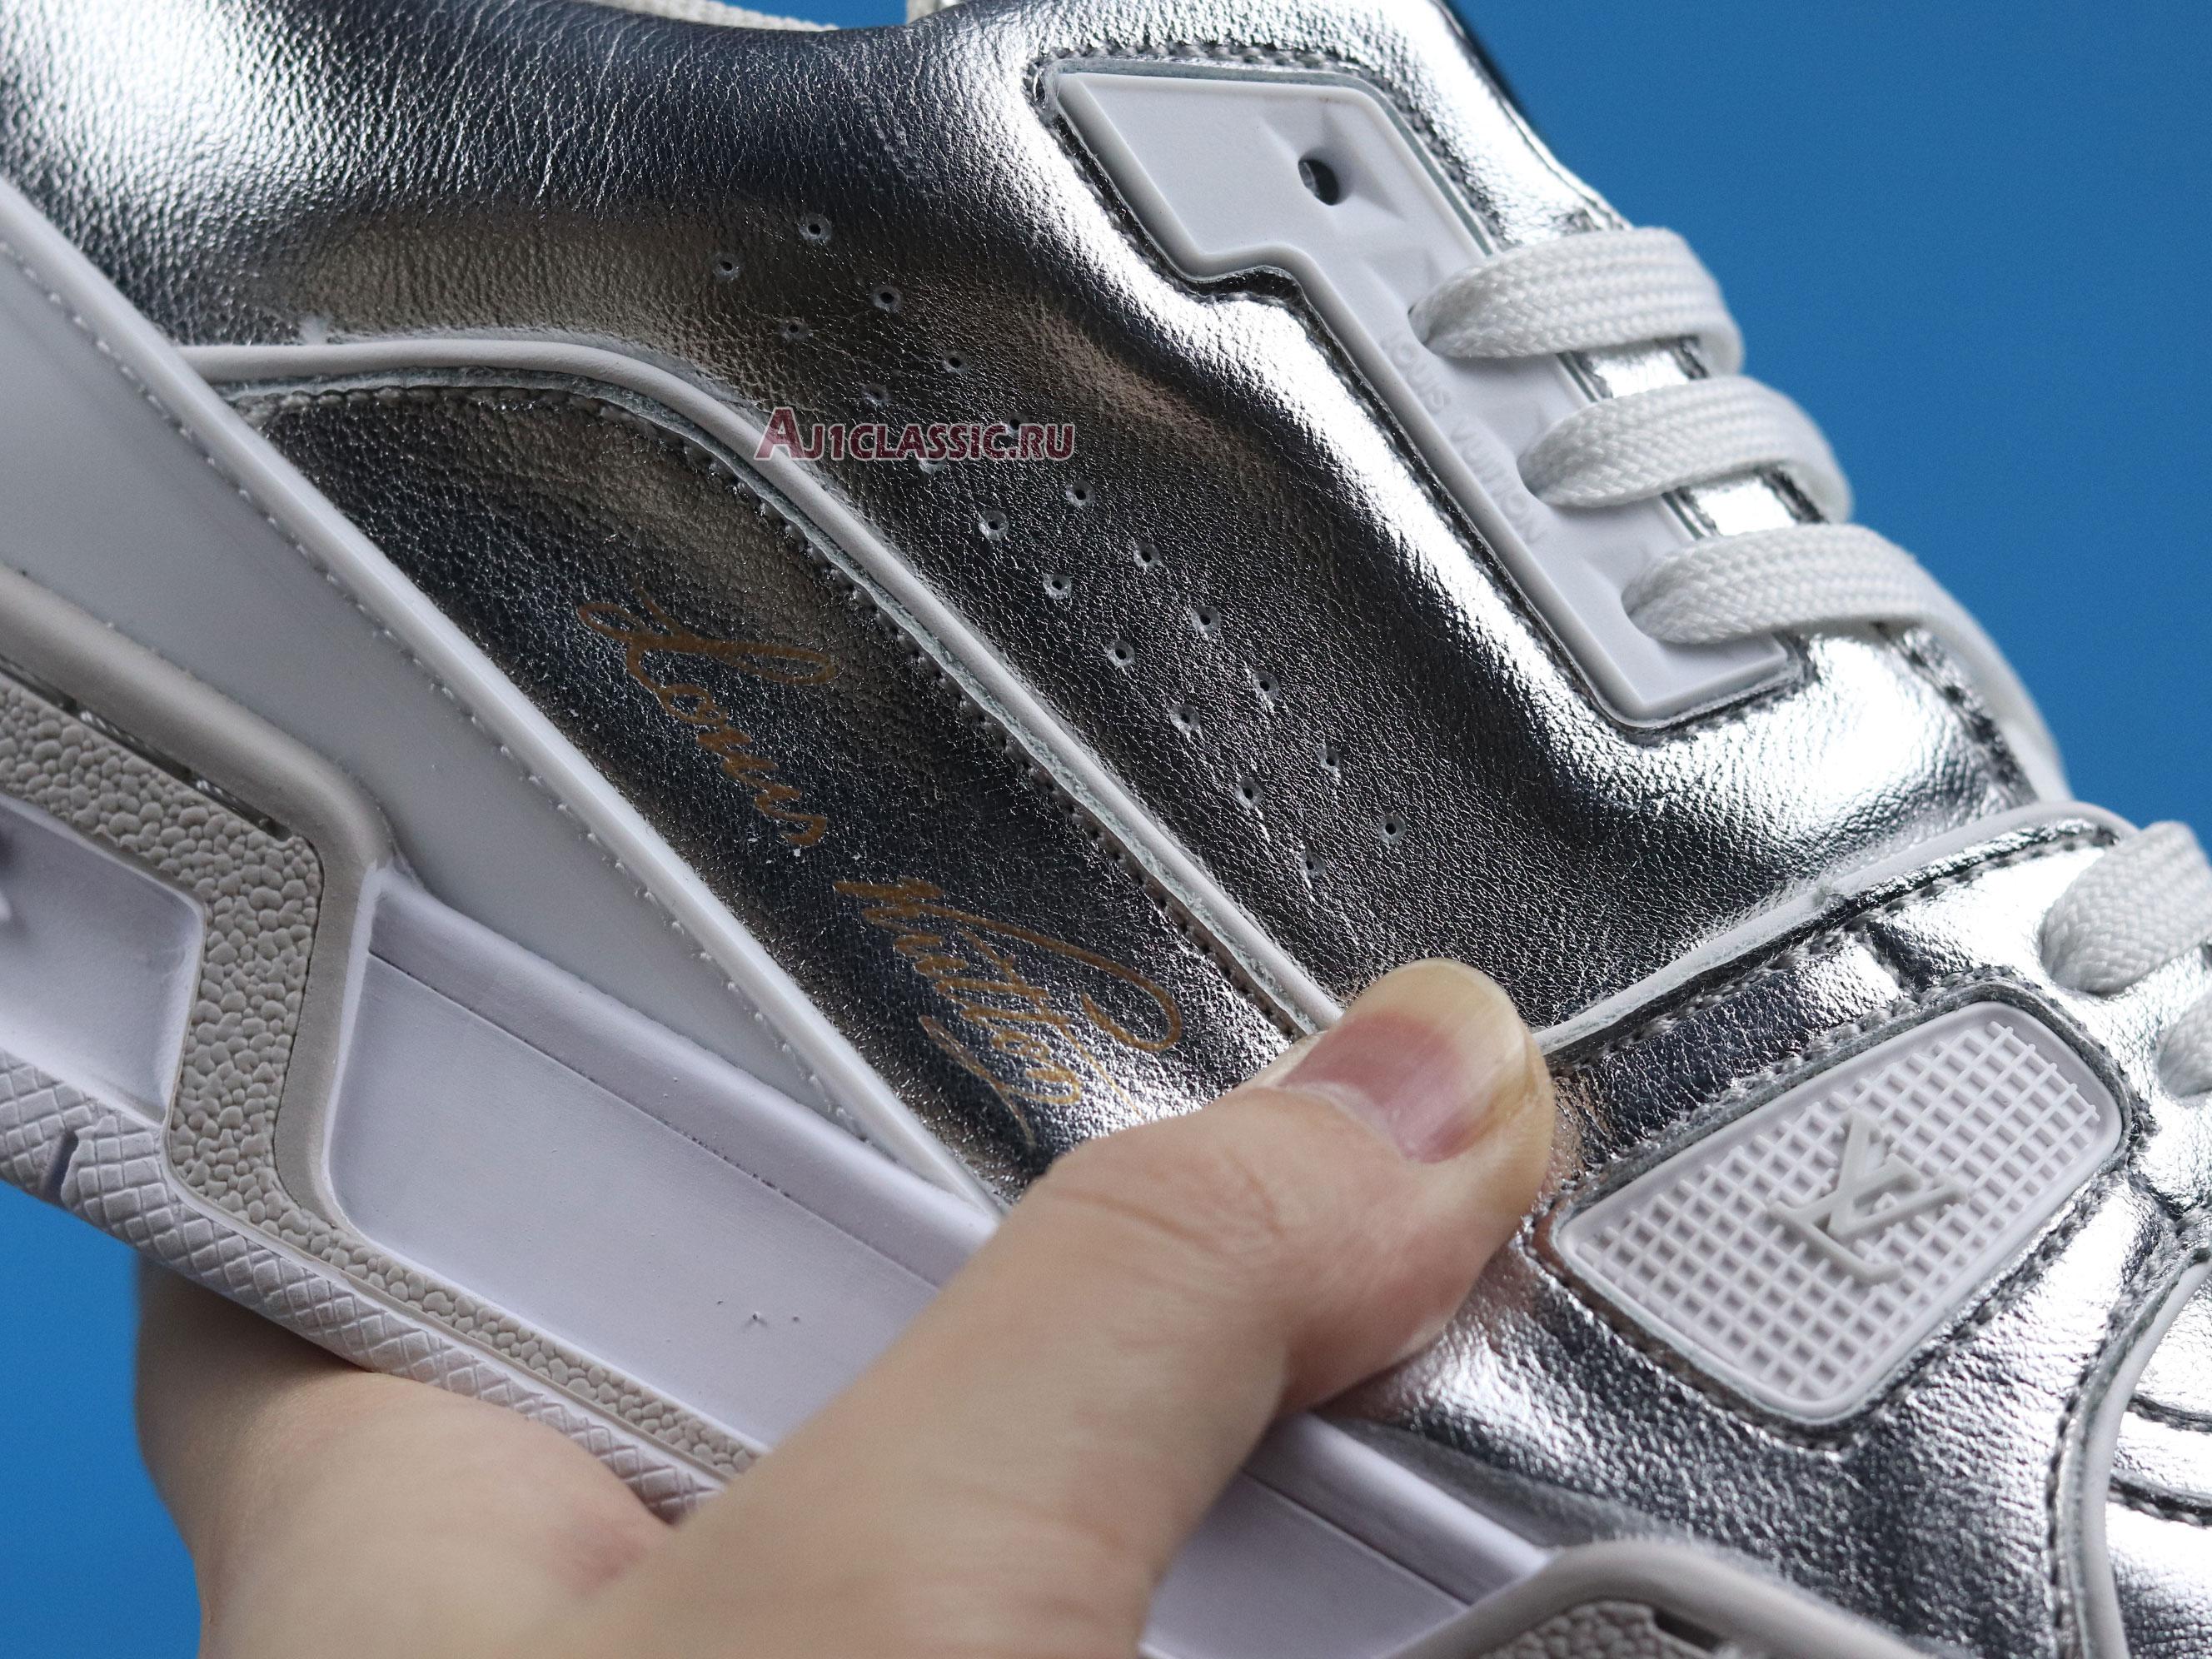 Louis Vuitton LV Trainer Sneaker Low "Silver White" 1A8KGO